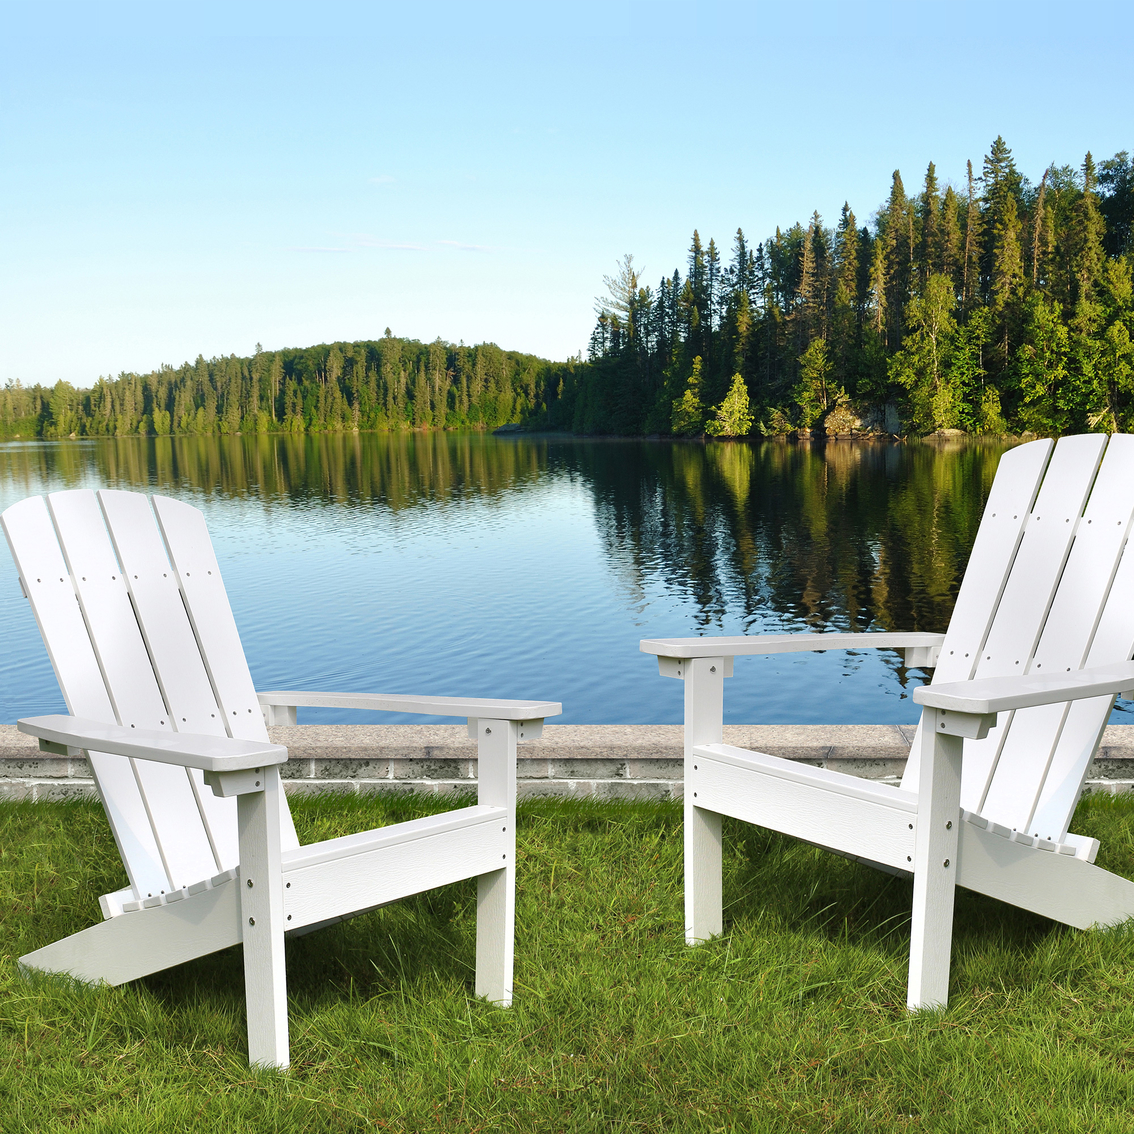 Northbeam Lakeside Faux Wood Adirondack Chair - Image 9 of 10